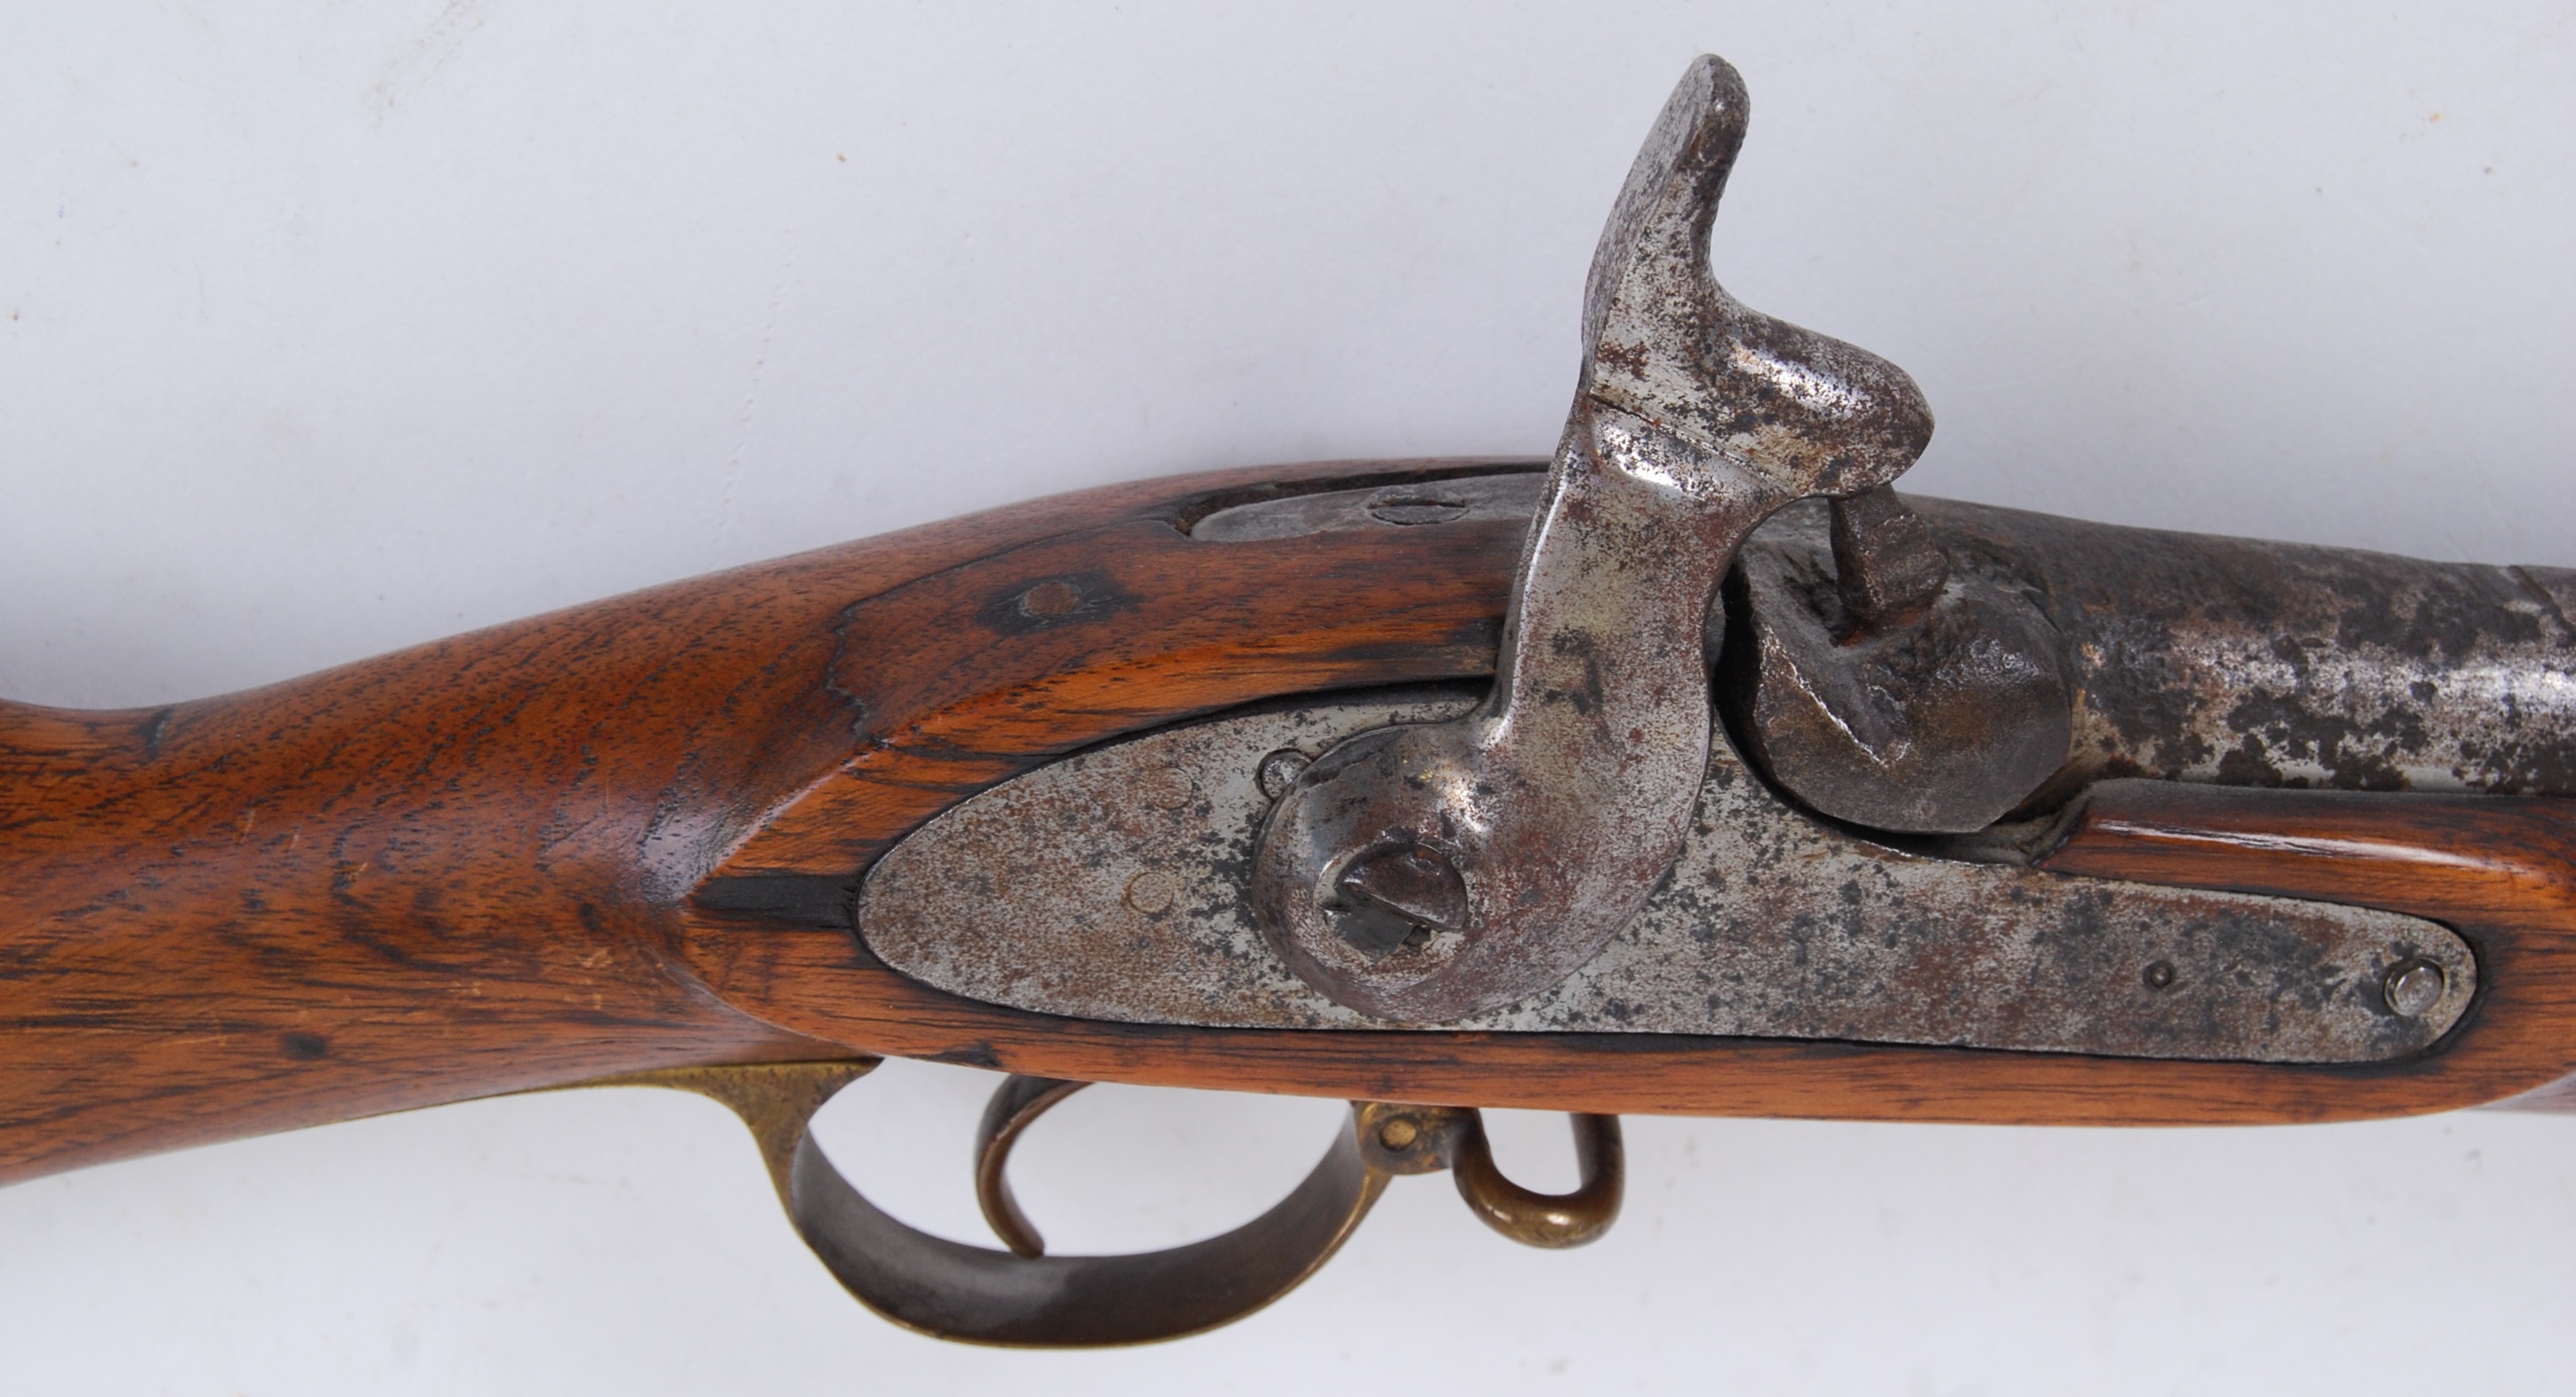 RIFLE: A 19th century percussion cap rifle gun, - Image 2 of 4